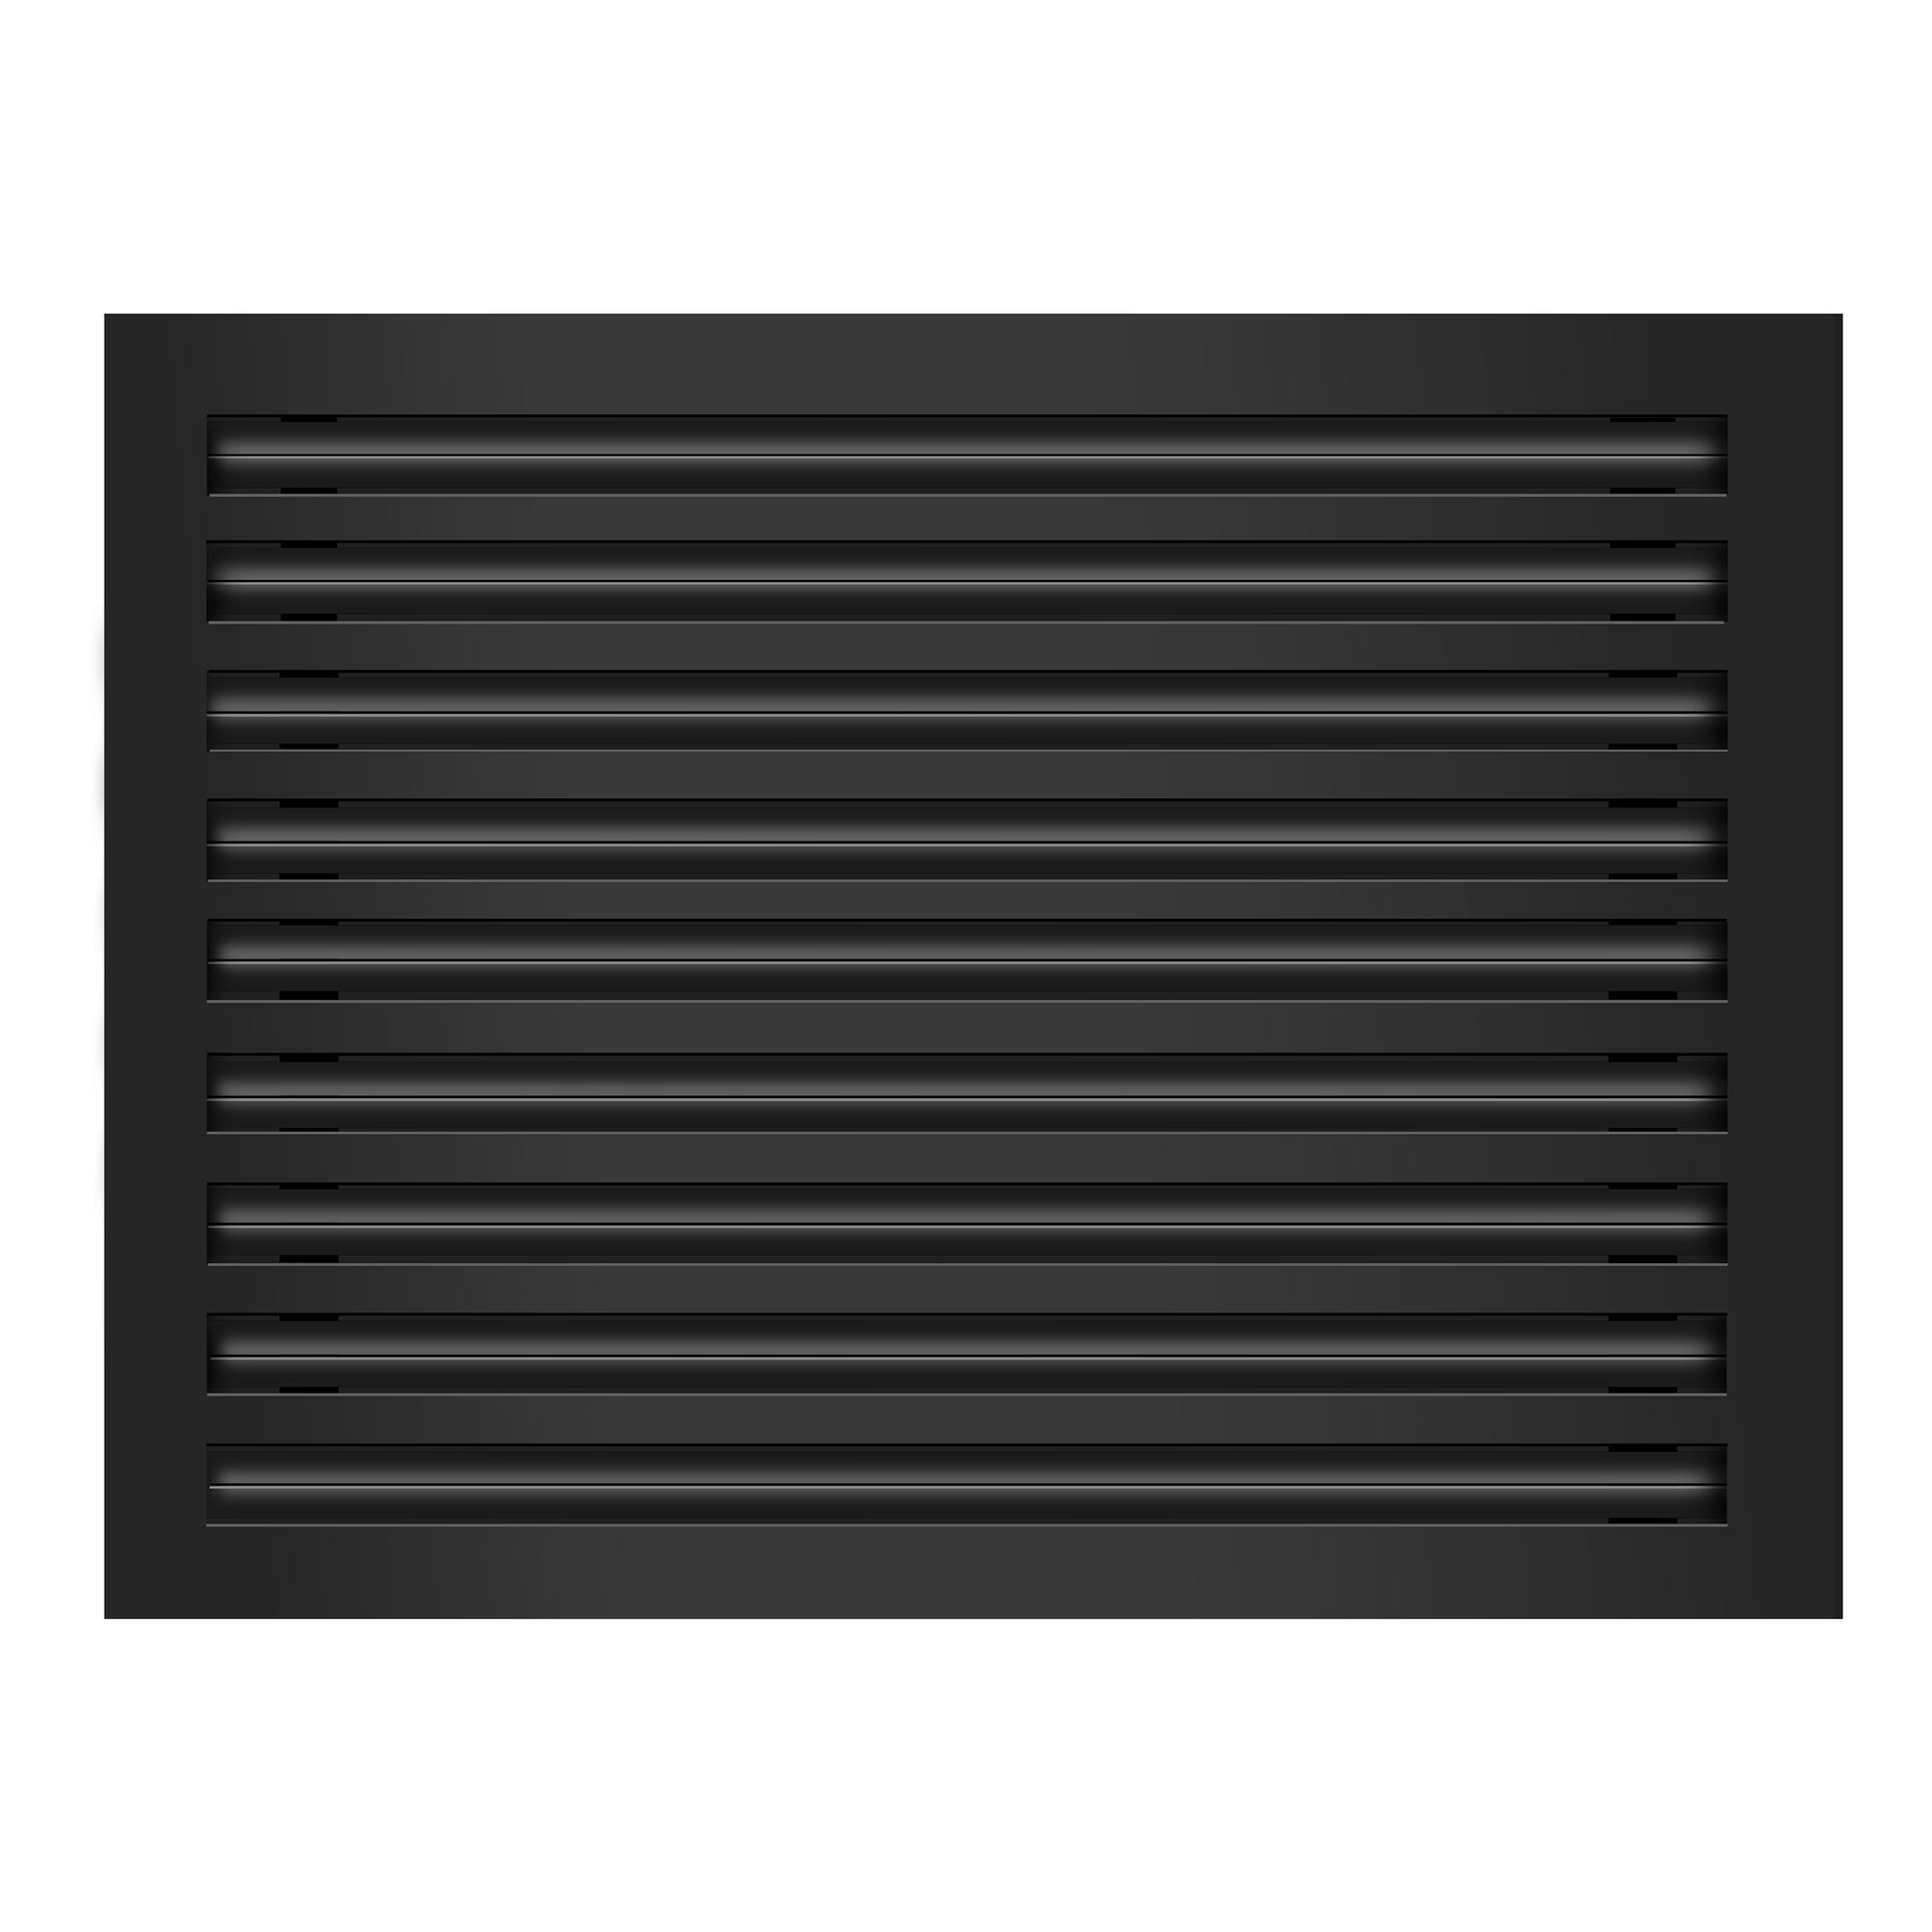 Front View of 24x18 Modern Air Vent Cover Black - 24x18 Standard Linear Slot Diffuser Black - Texas Buildmart